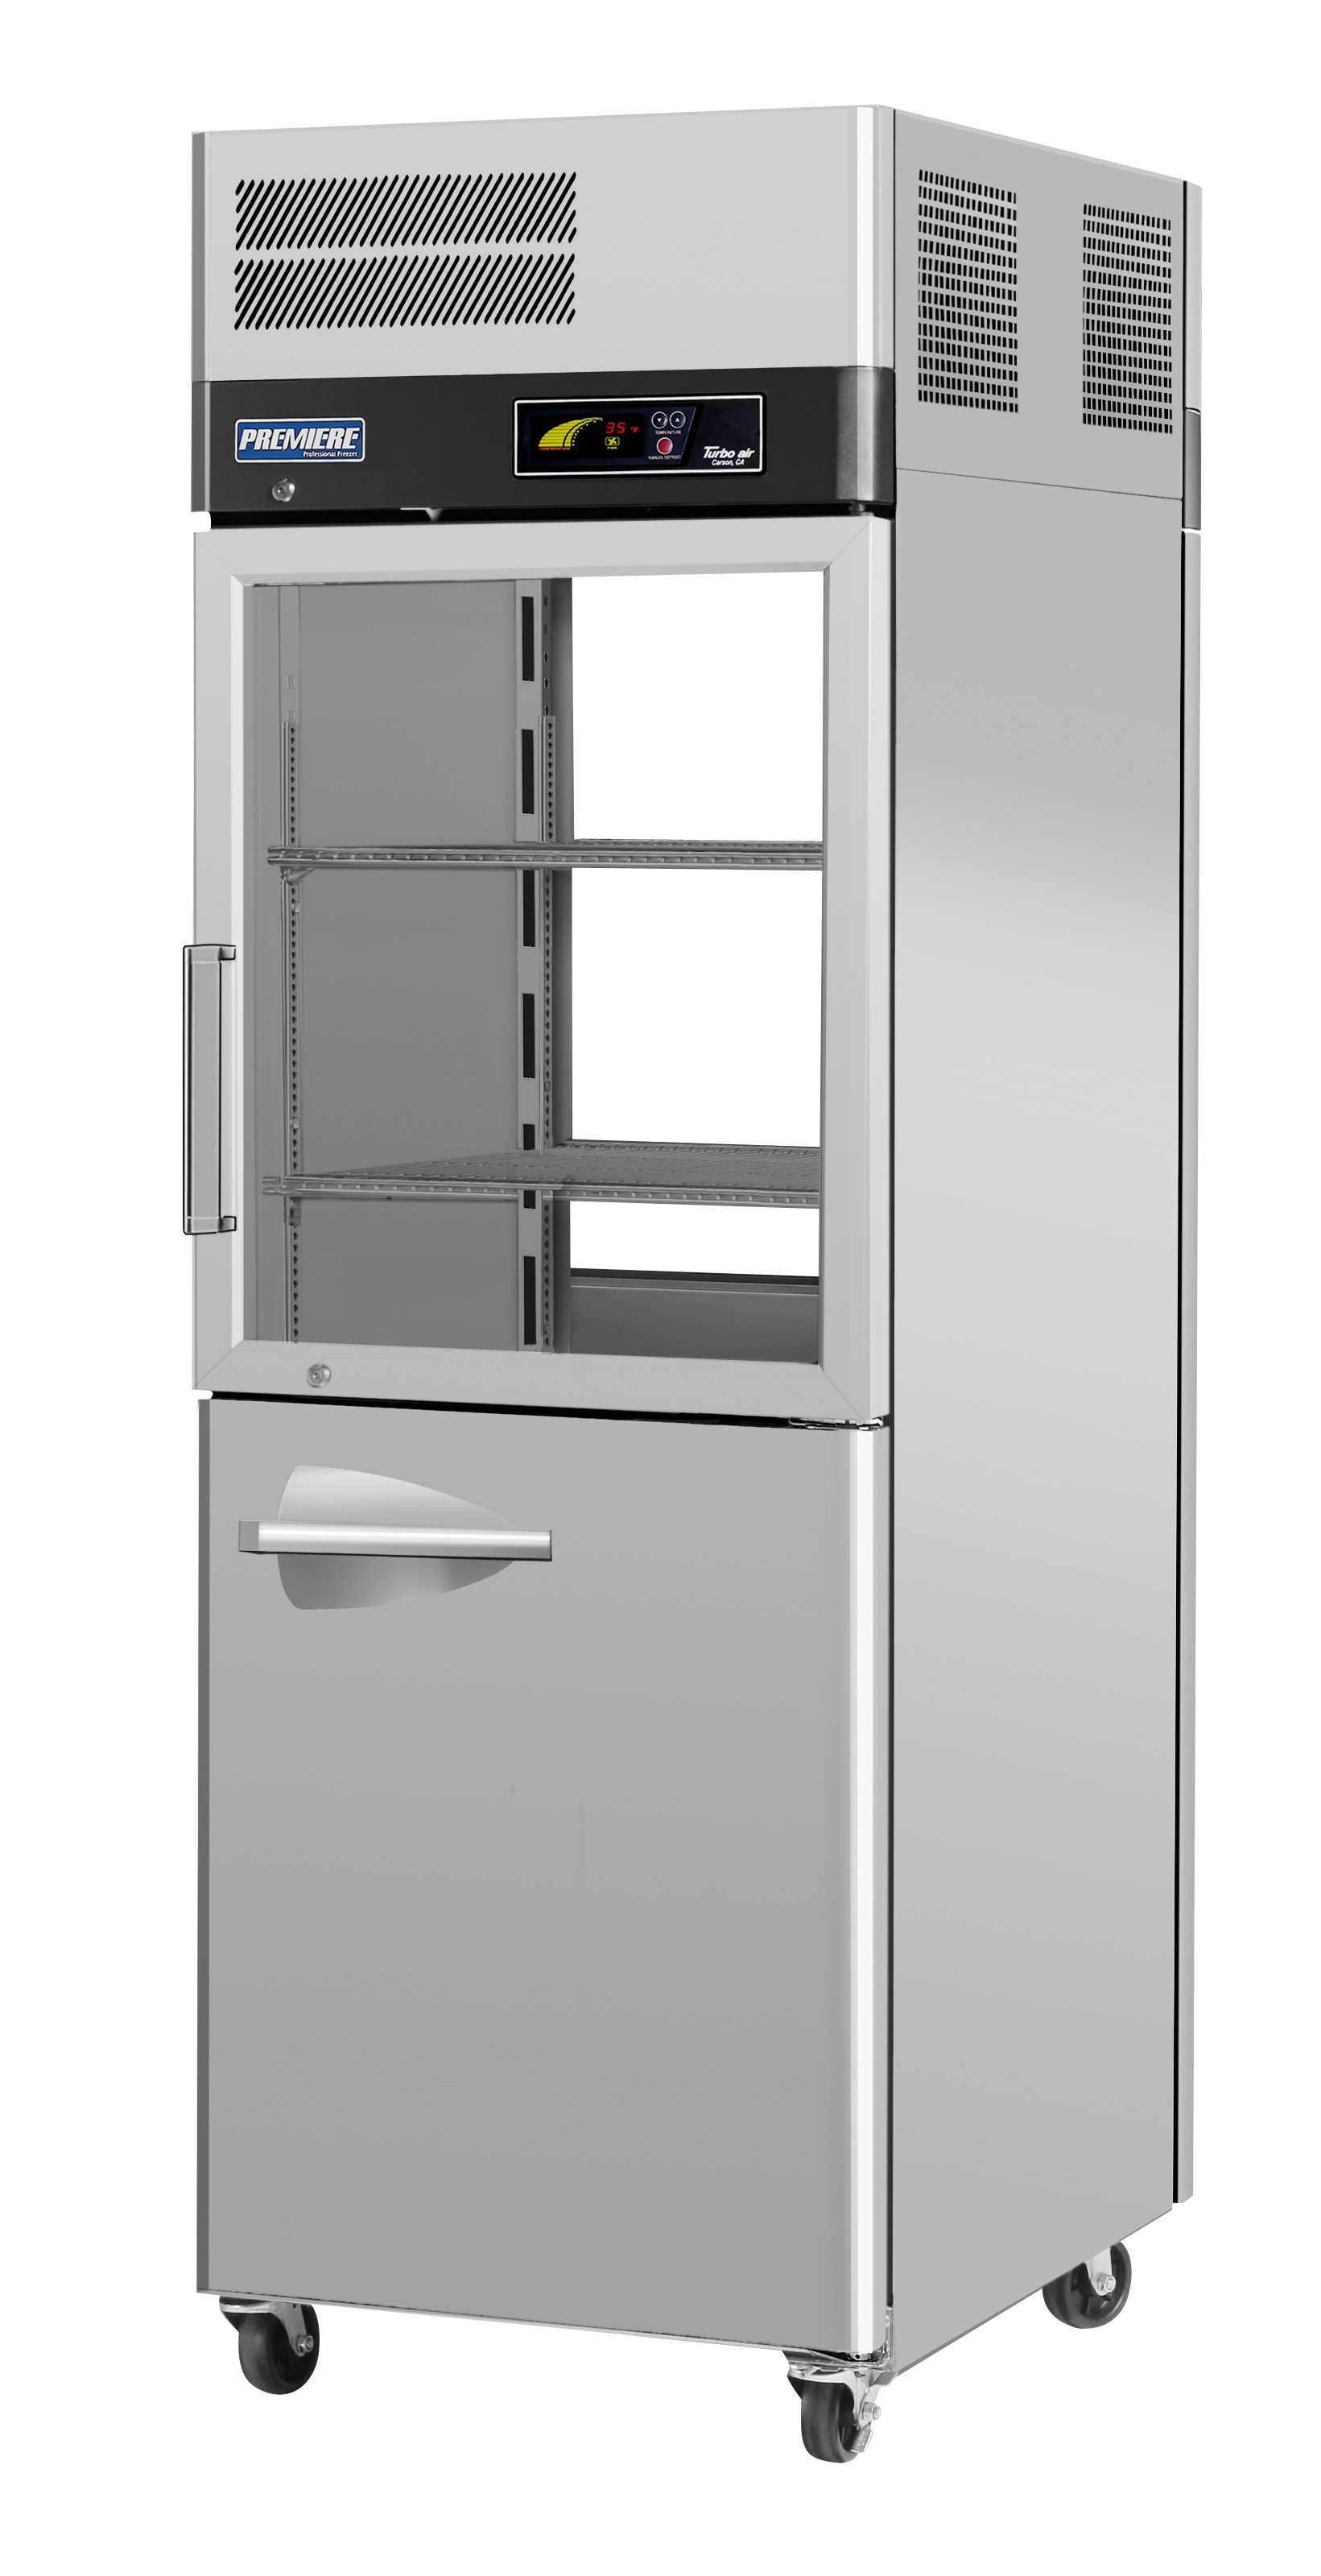 Premiere PRO Series Refrigerator, pass-thru, one-section